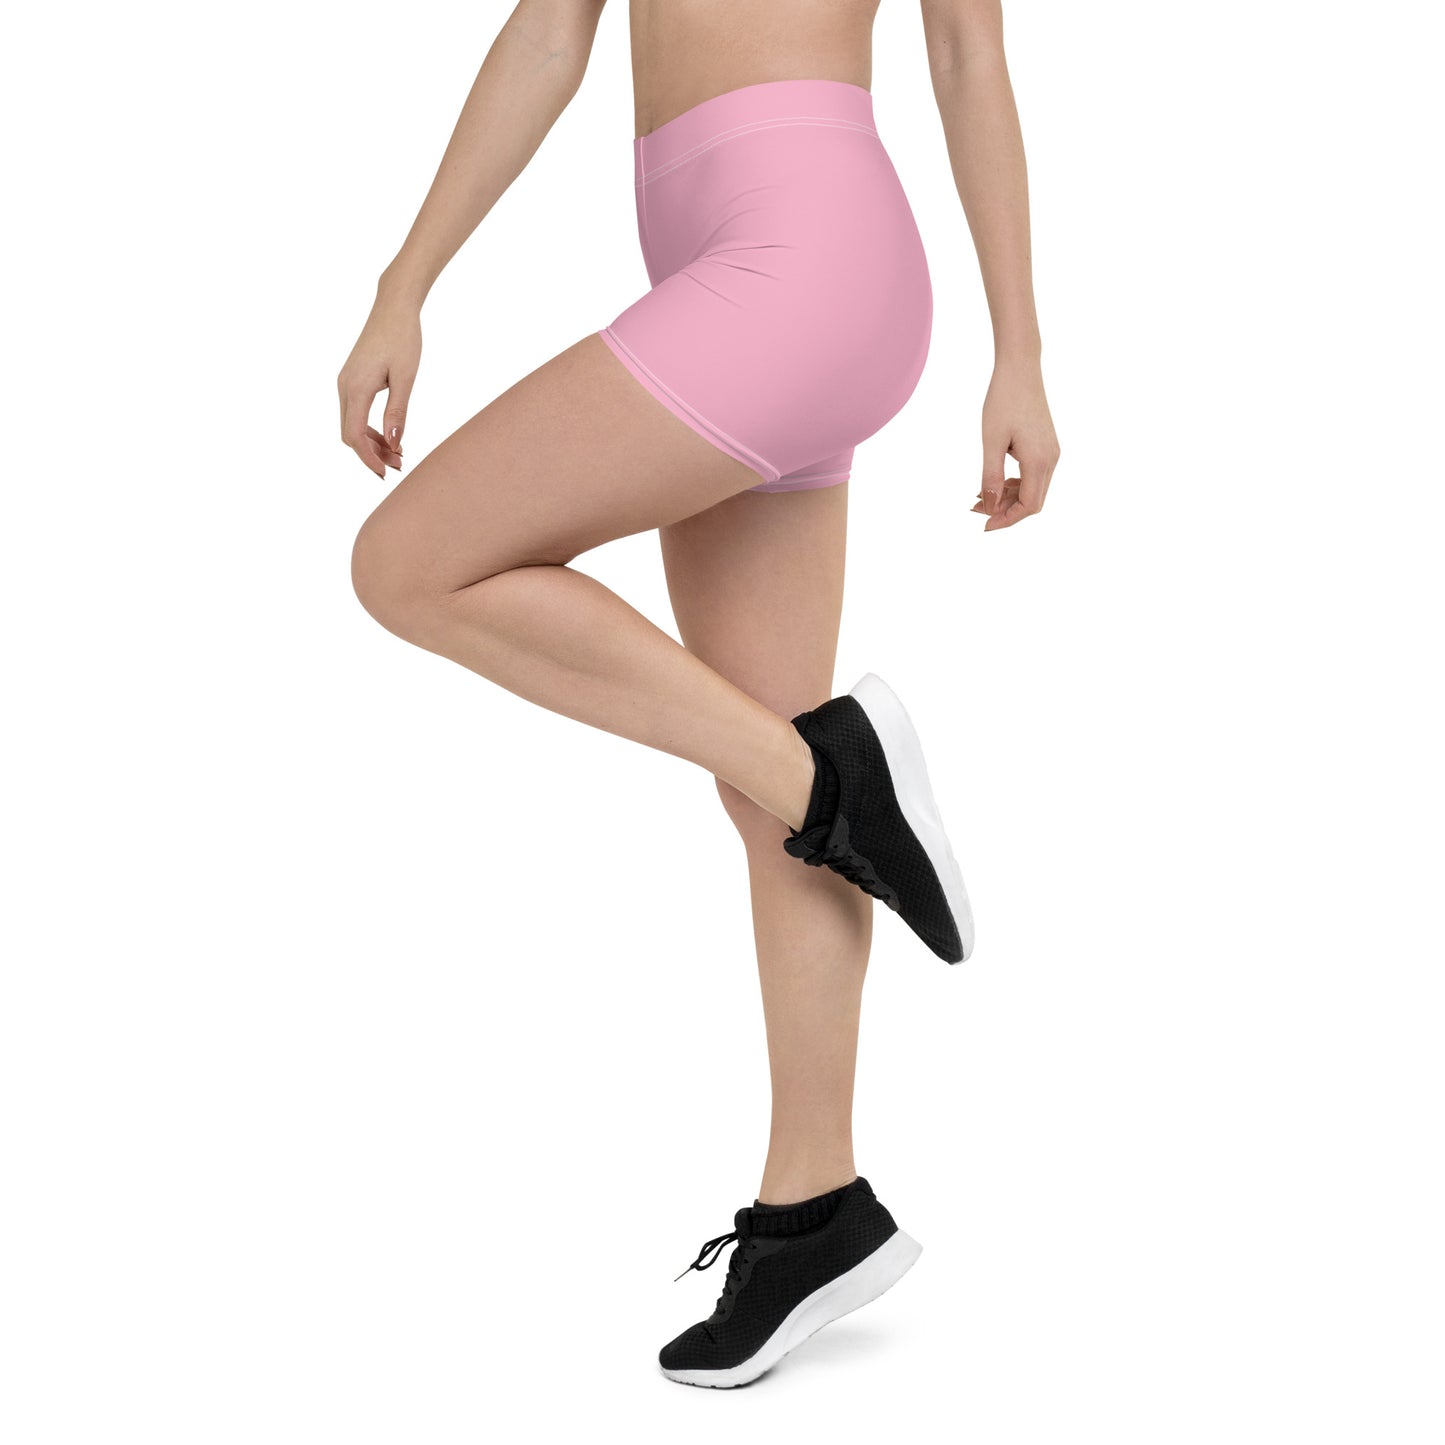 Legging Shorts Yoga & Fitness Cotton Candy